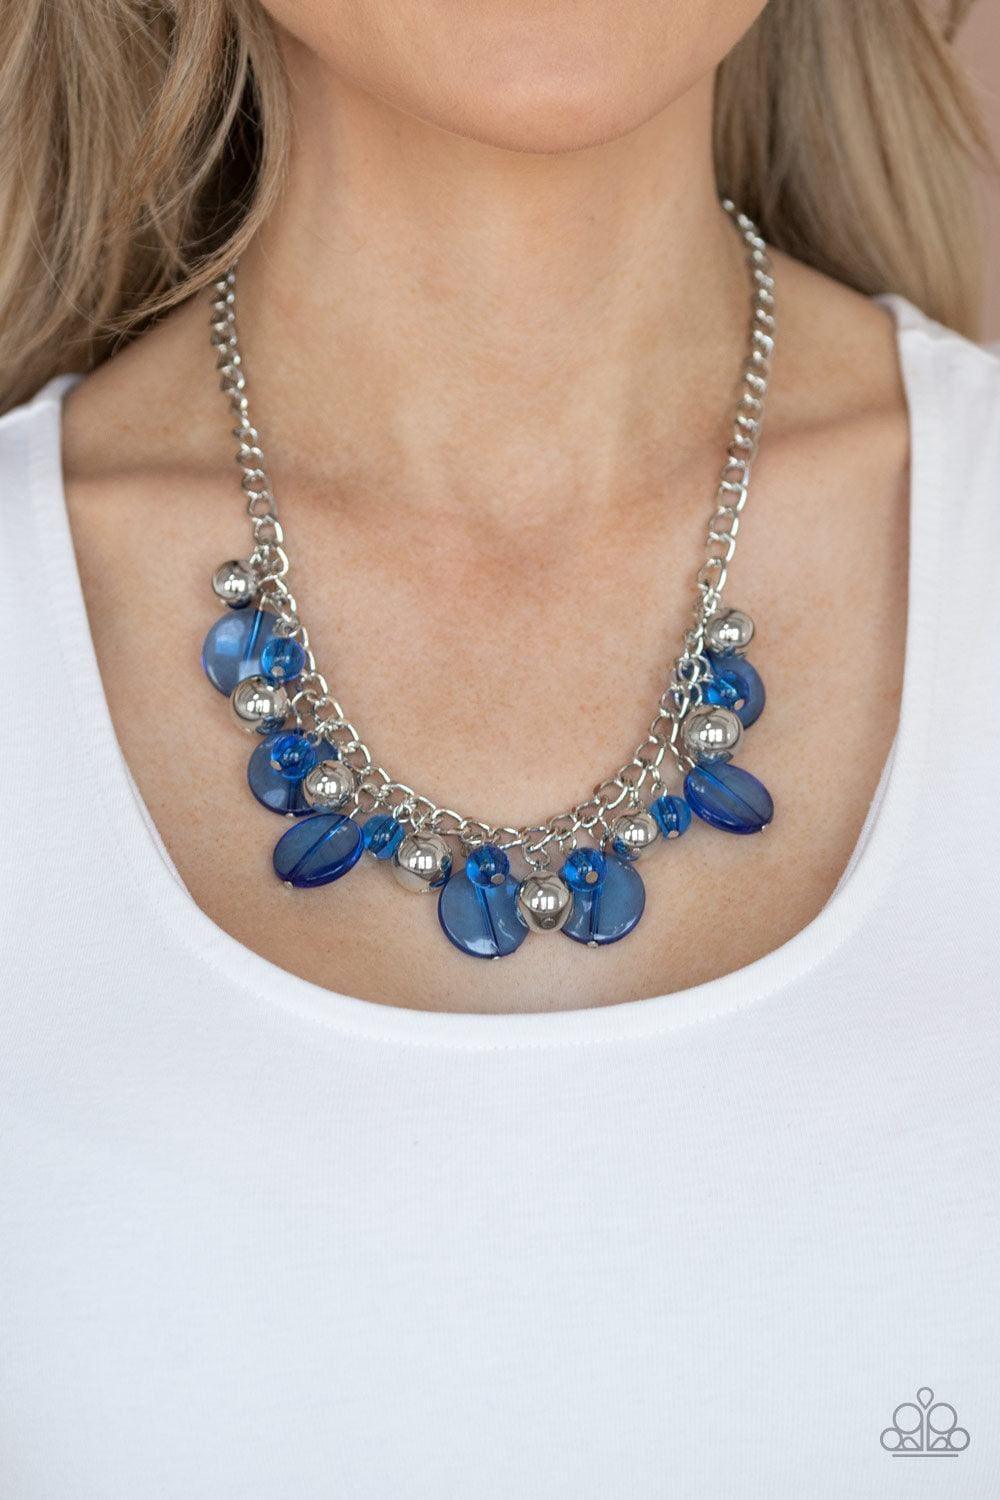 Paparazzi Accessories - Gossip Glam - Blue Necklace - Bling by JessieK